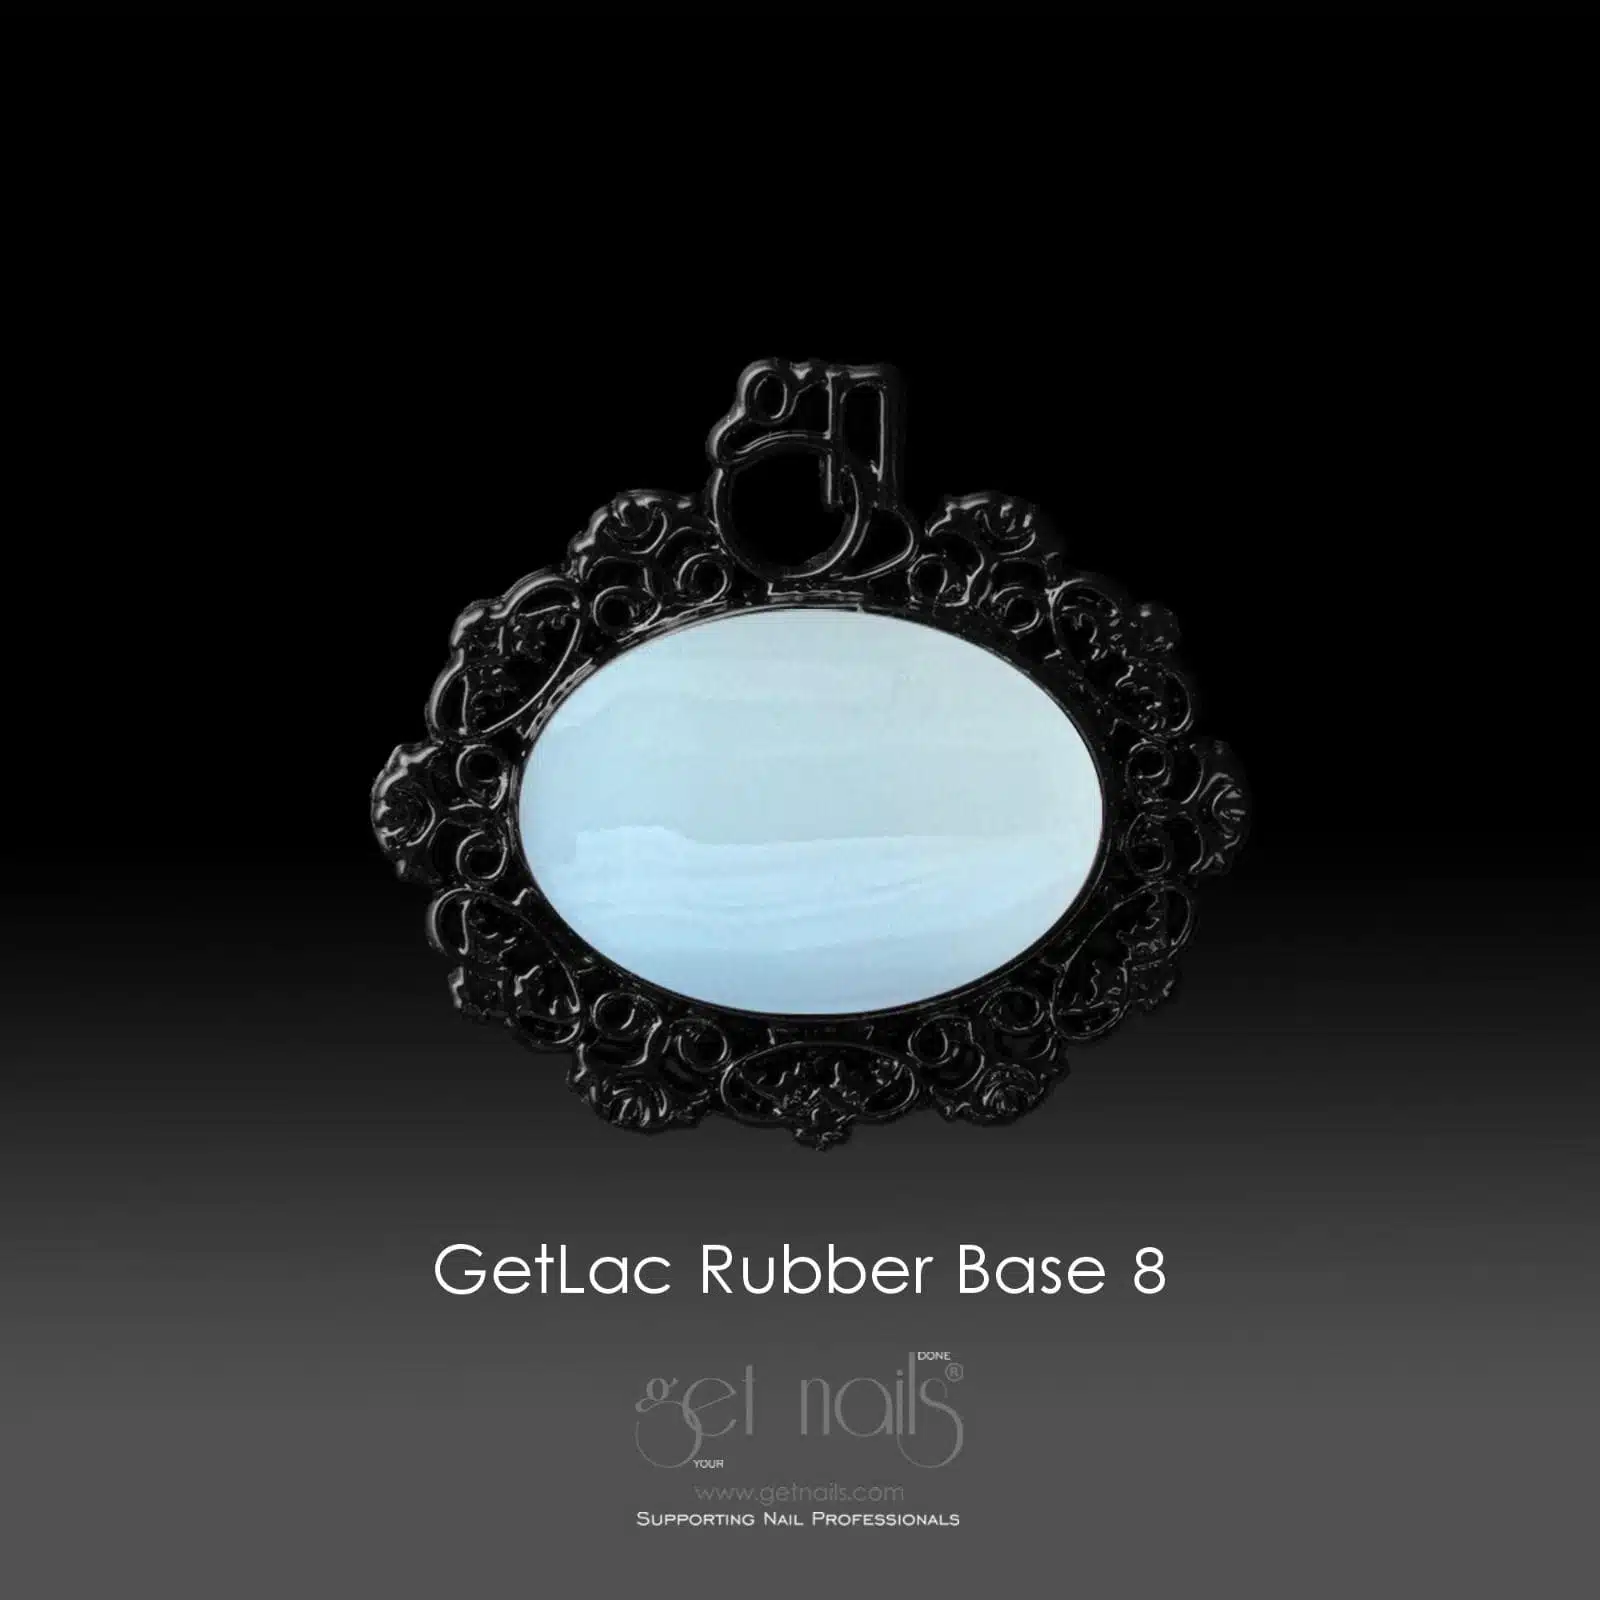 Get Nails Austria - GetLac Rubber Base 8 15g